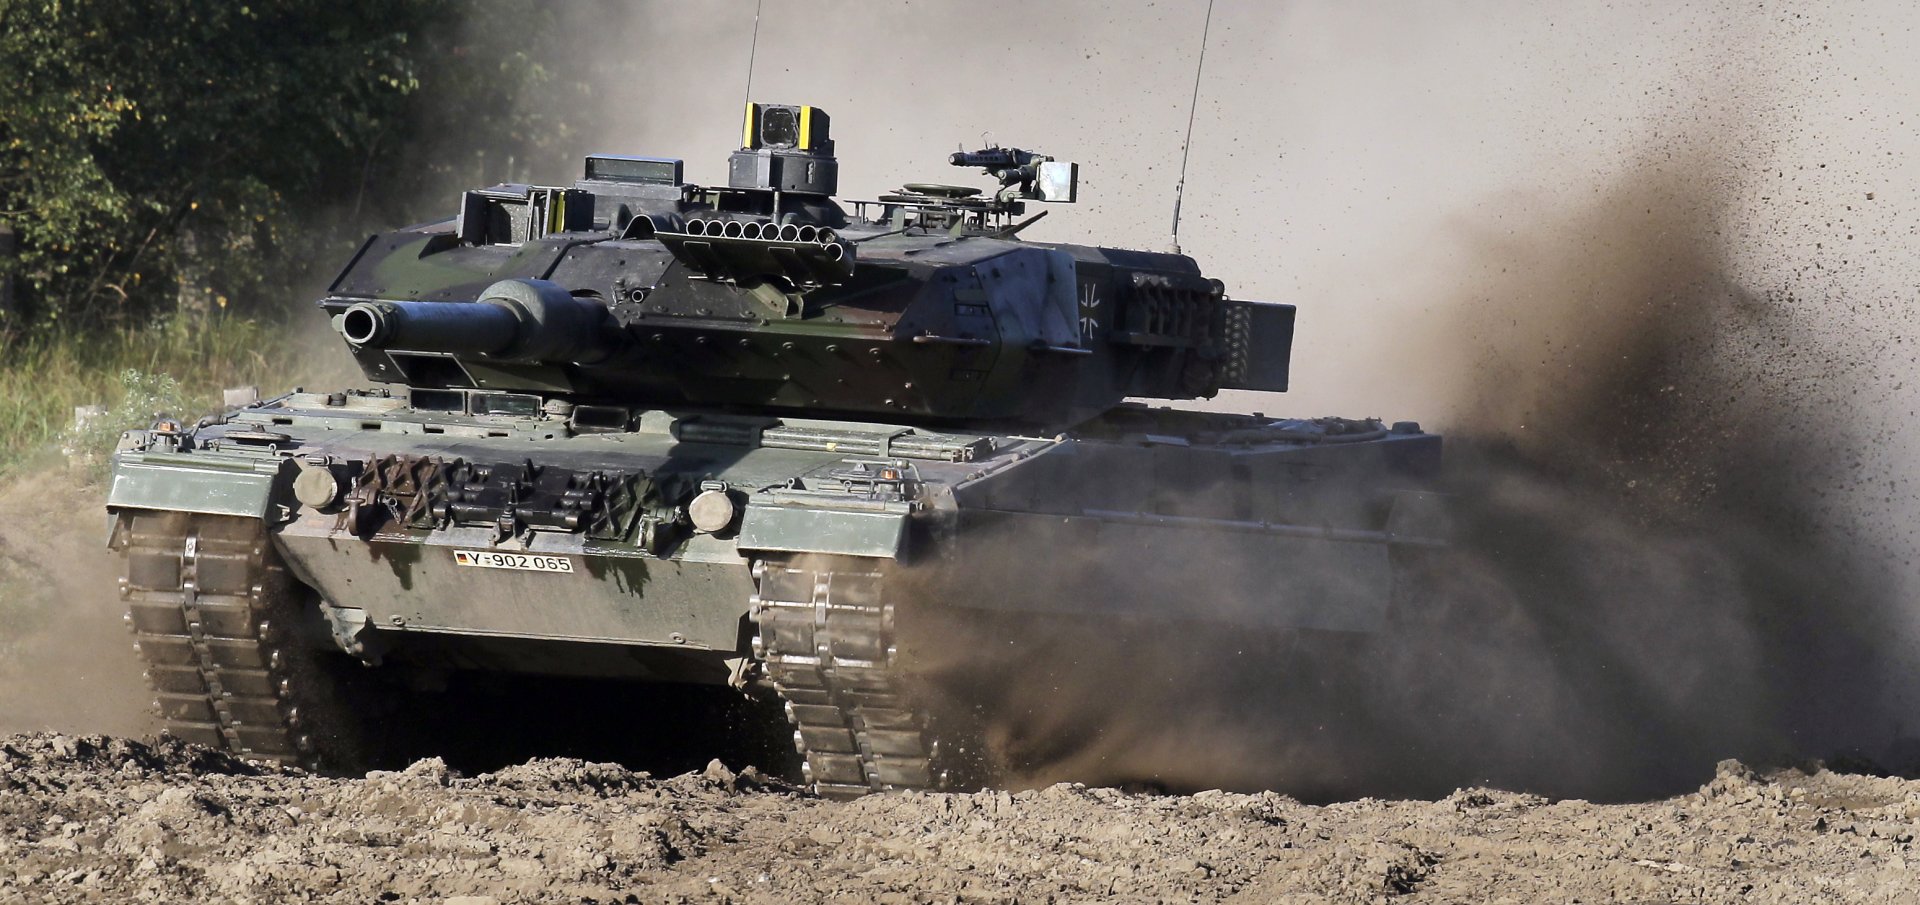 Leopard-2